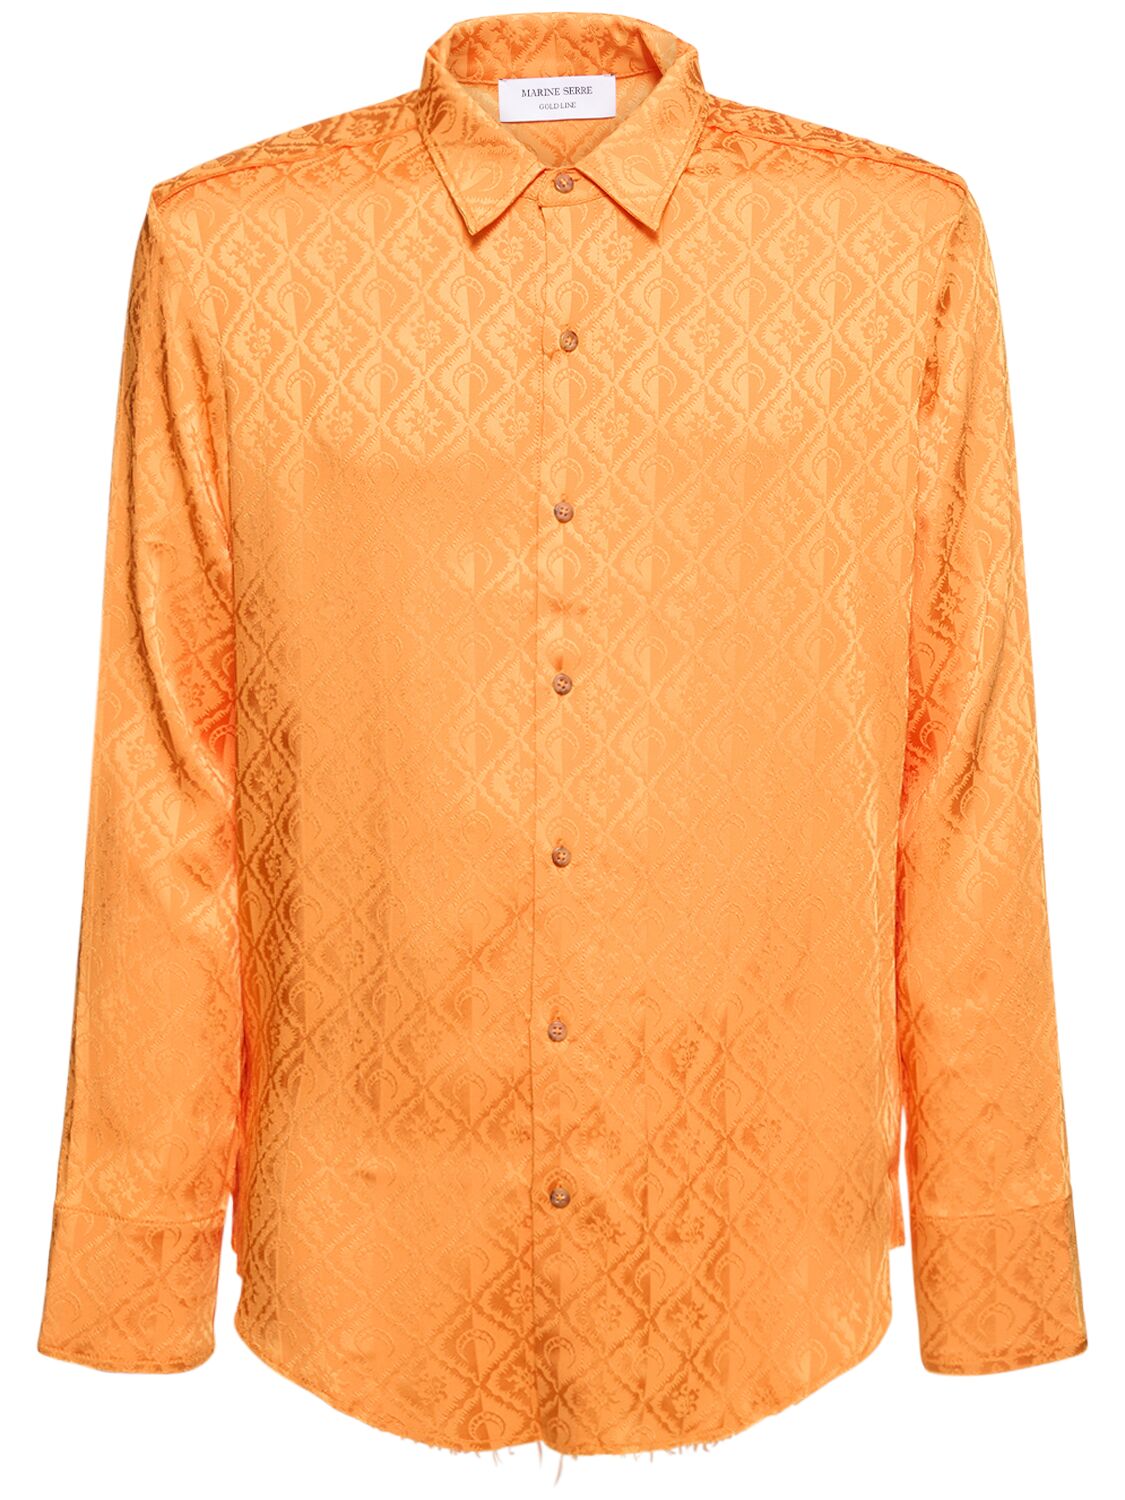 Marine Serre Moon Diamant Satin Jacquard Shirt In Orange